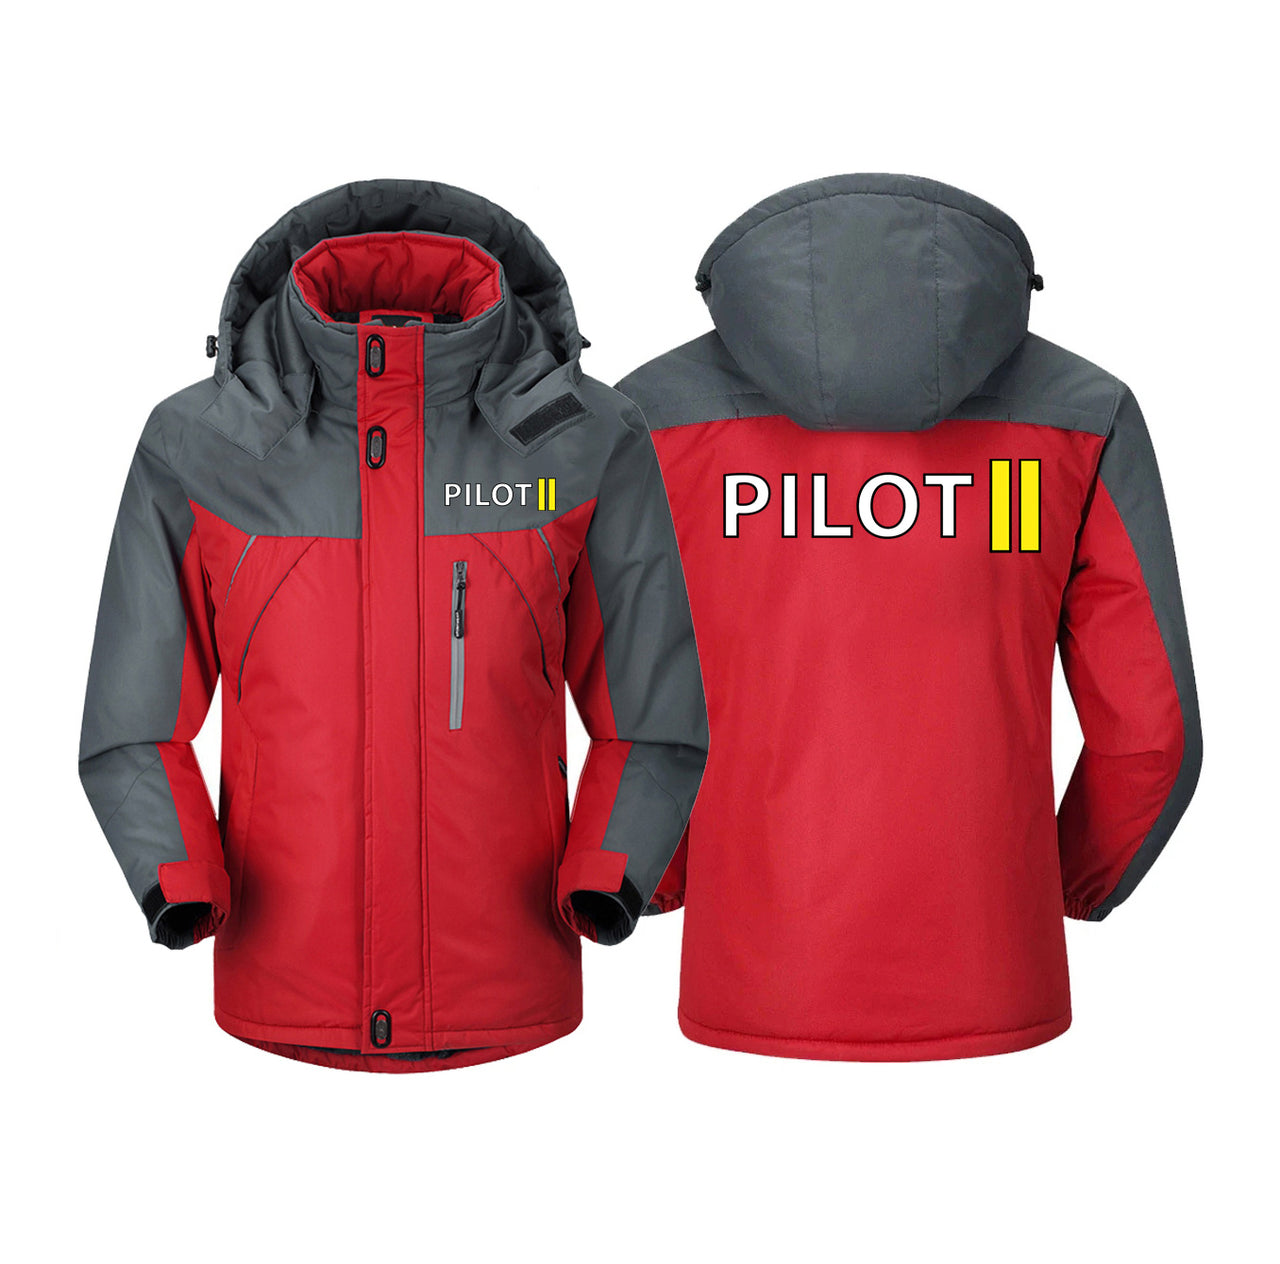 Pilot & Stripes (2 Lines) Designed Thick Winter Jackets